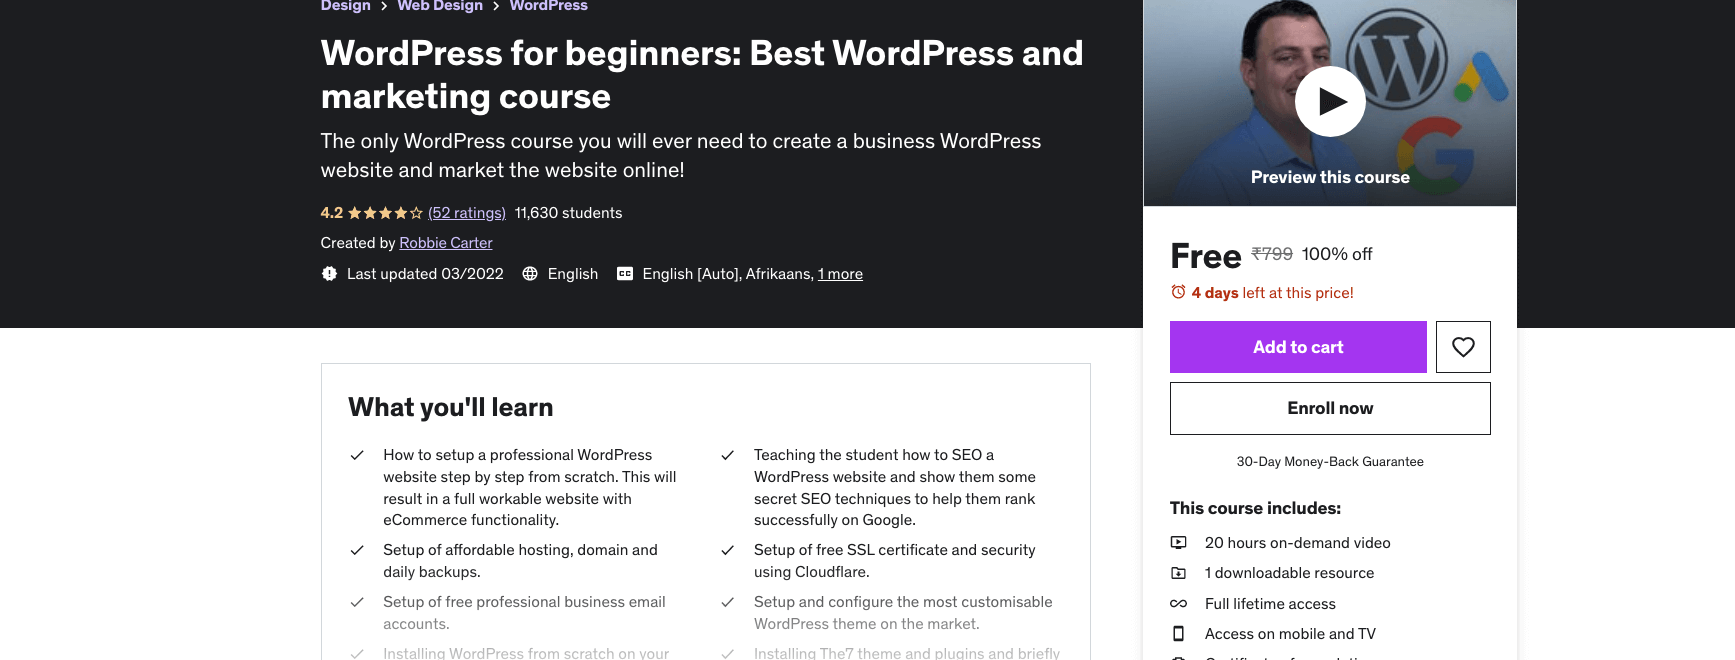 WordPress for beginners: Best WordPress and marketing course